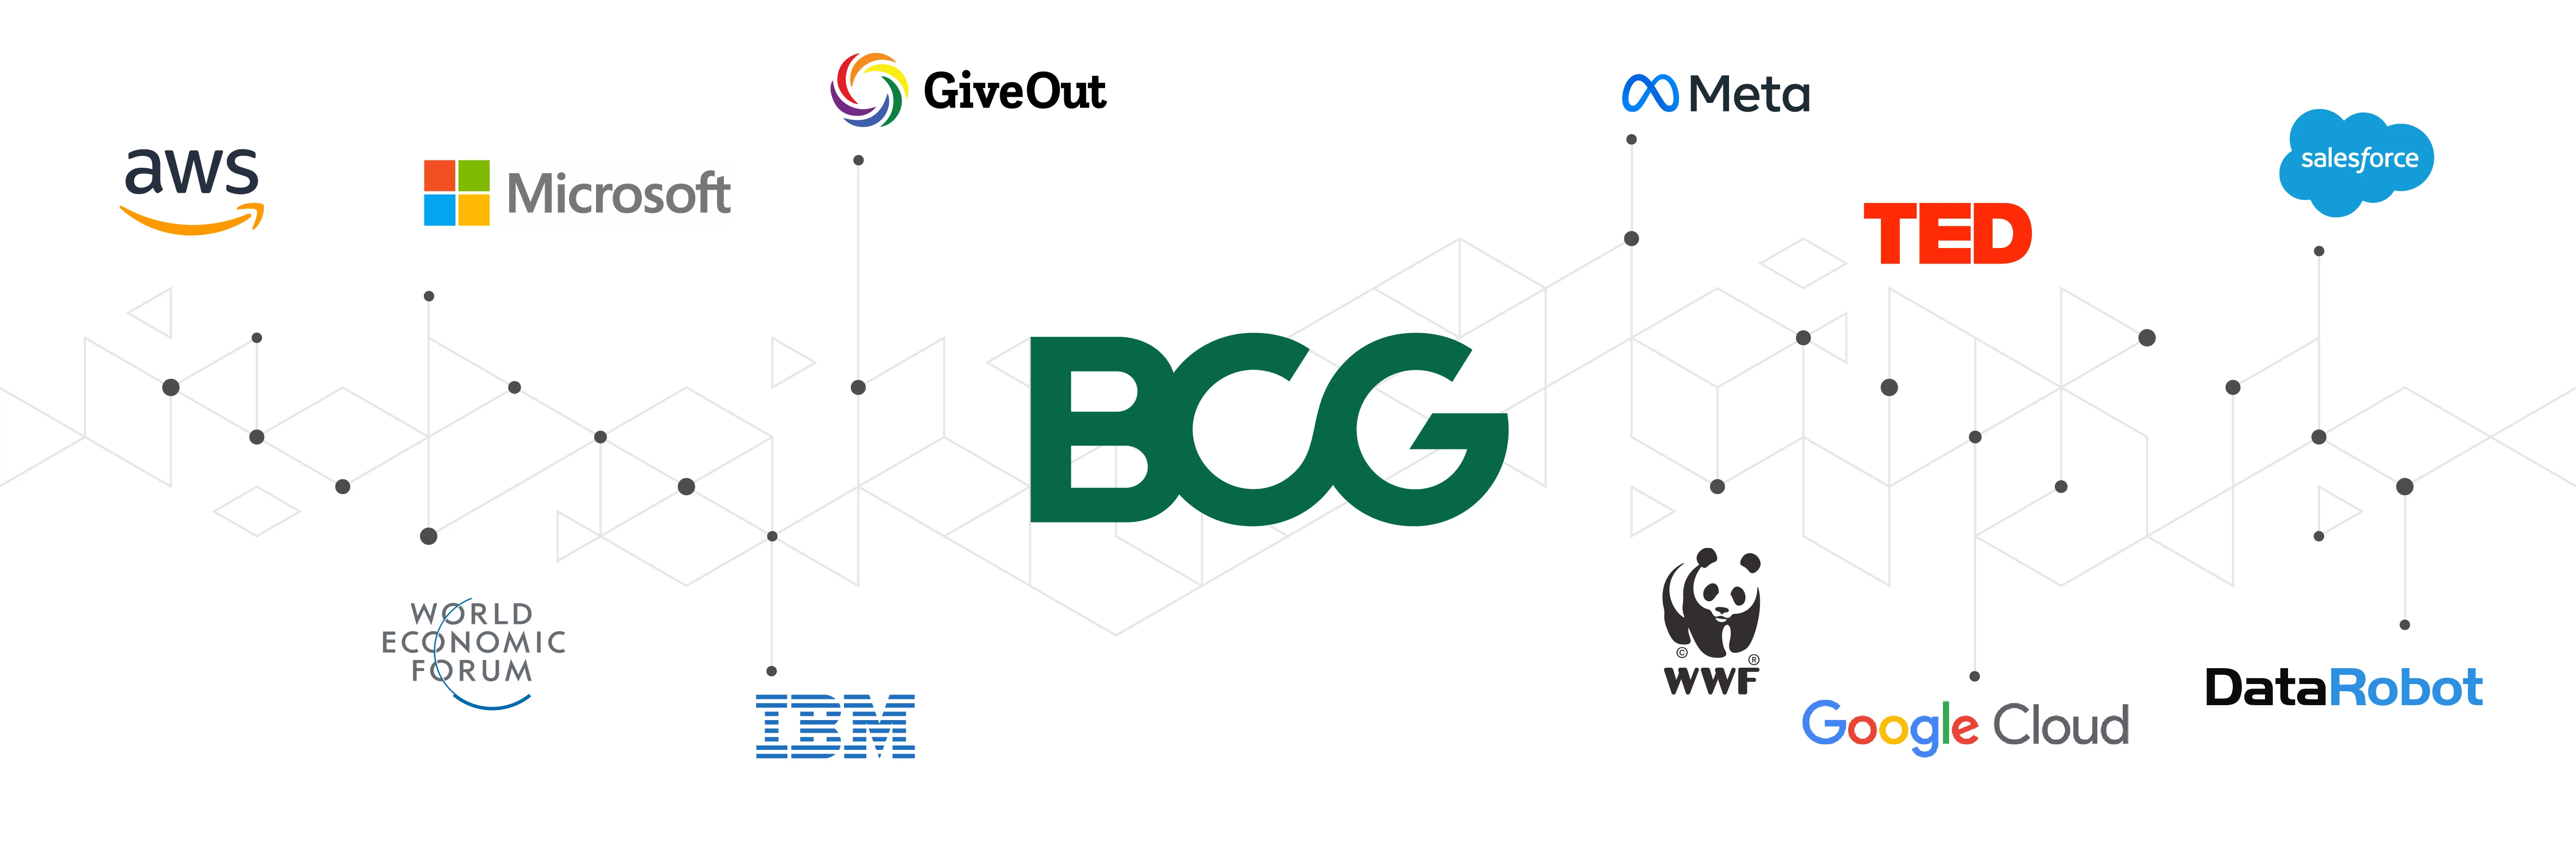 About BCG_Partnerships_v4.jpg